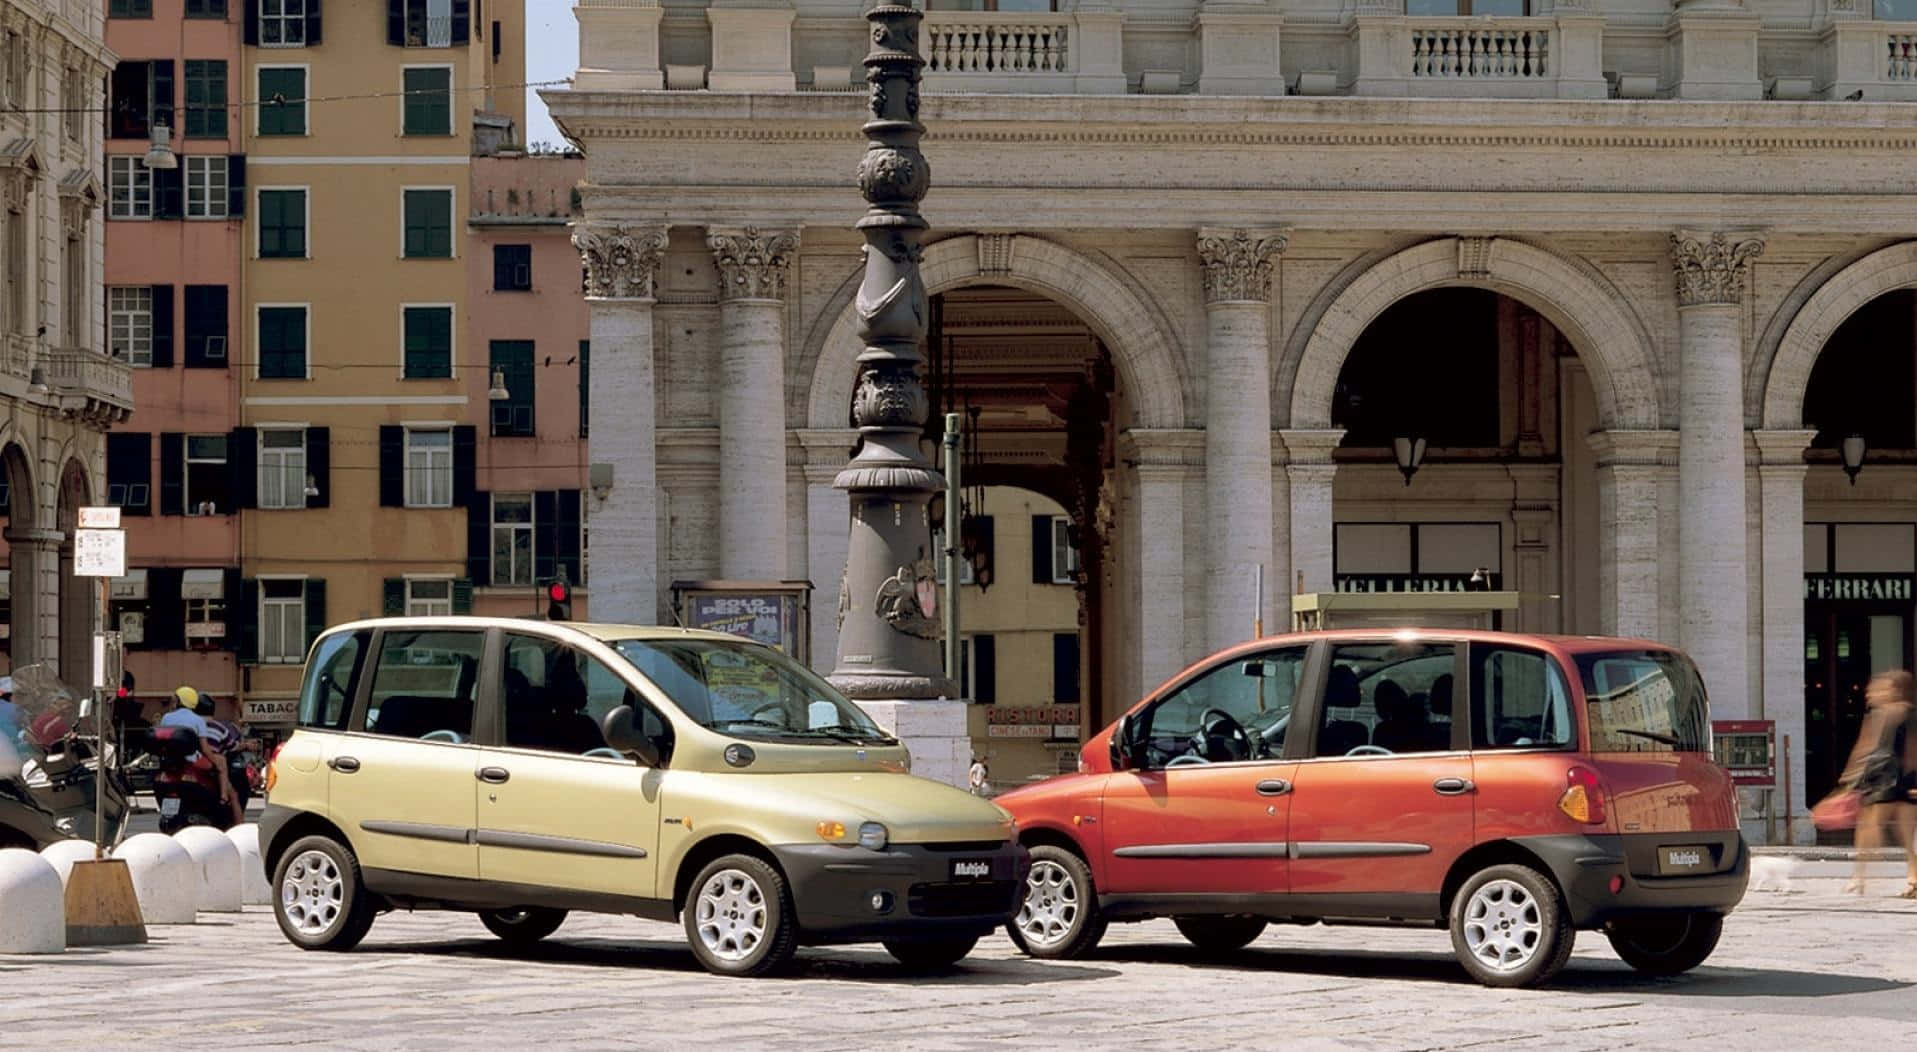 Caption: Sleek Fiat Multipla Posing Elegantly On The Streets Wallpaper